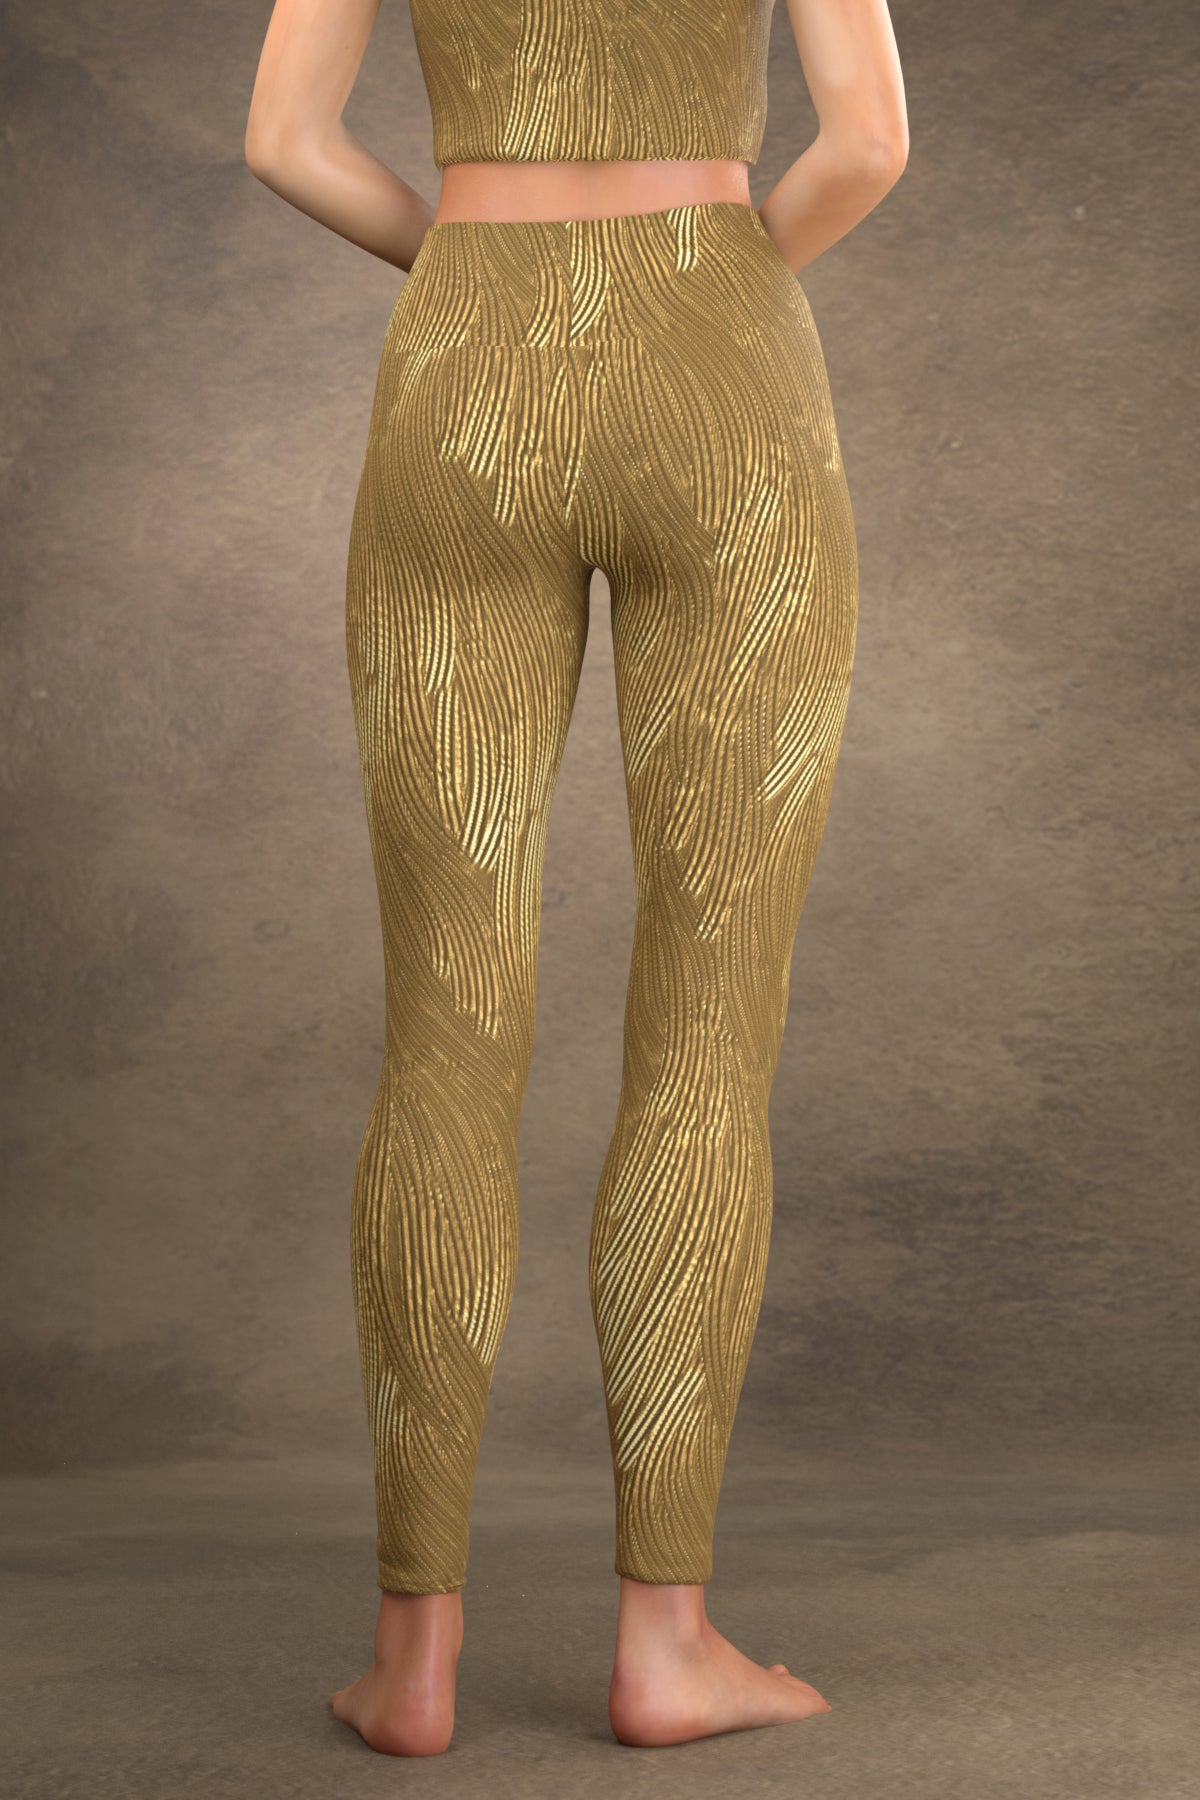 UCLA Gold - solid color Leggings